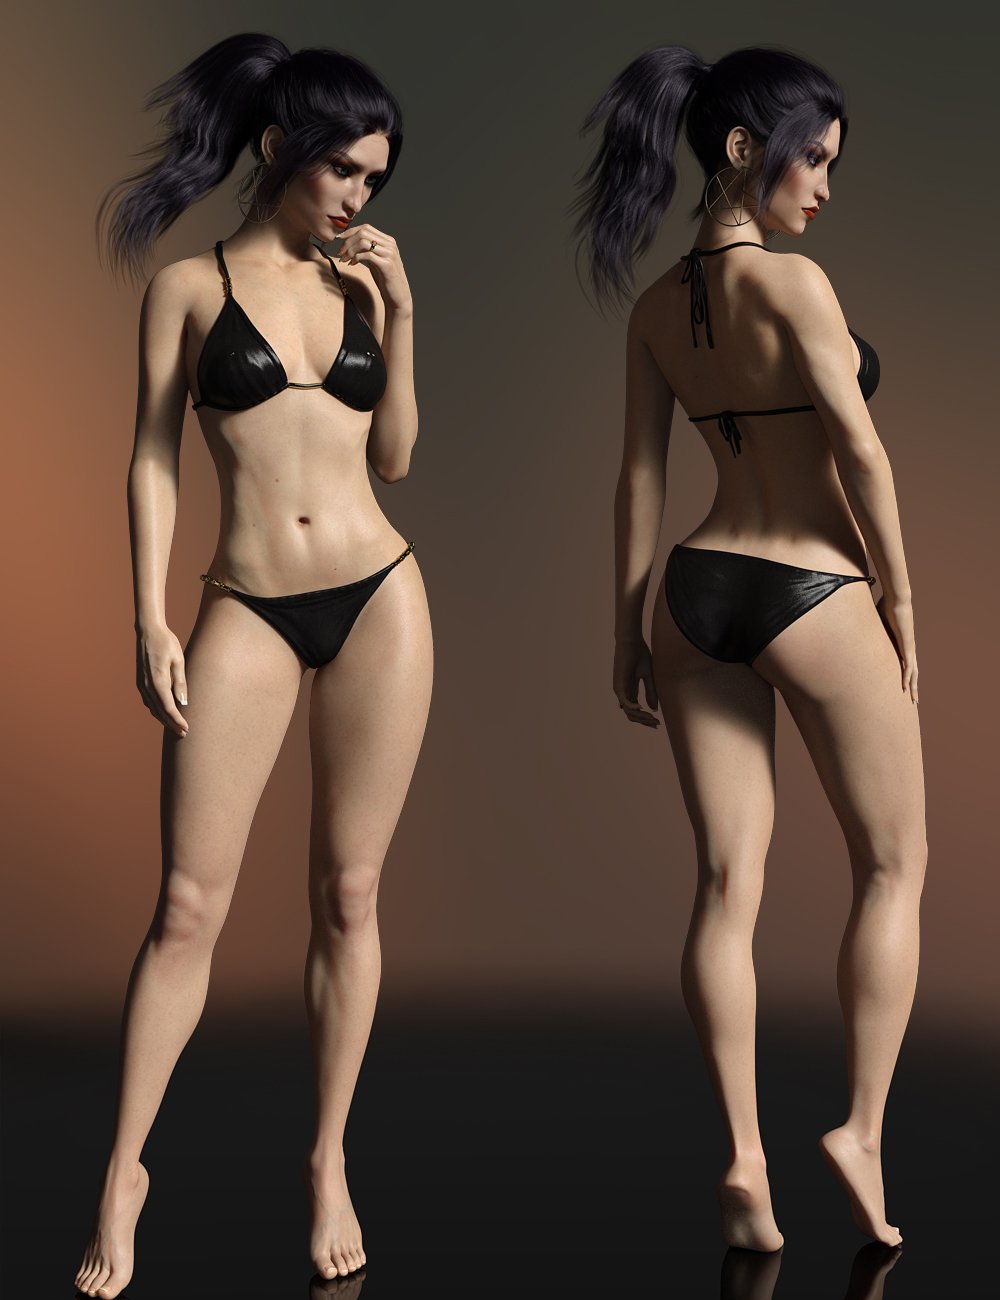 ZaraBeth for Genesis 8 Female by: TwiztedMetalhotlilme74, 3D Models by Daz 3D